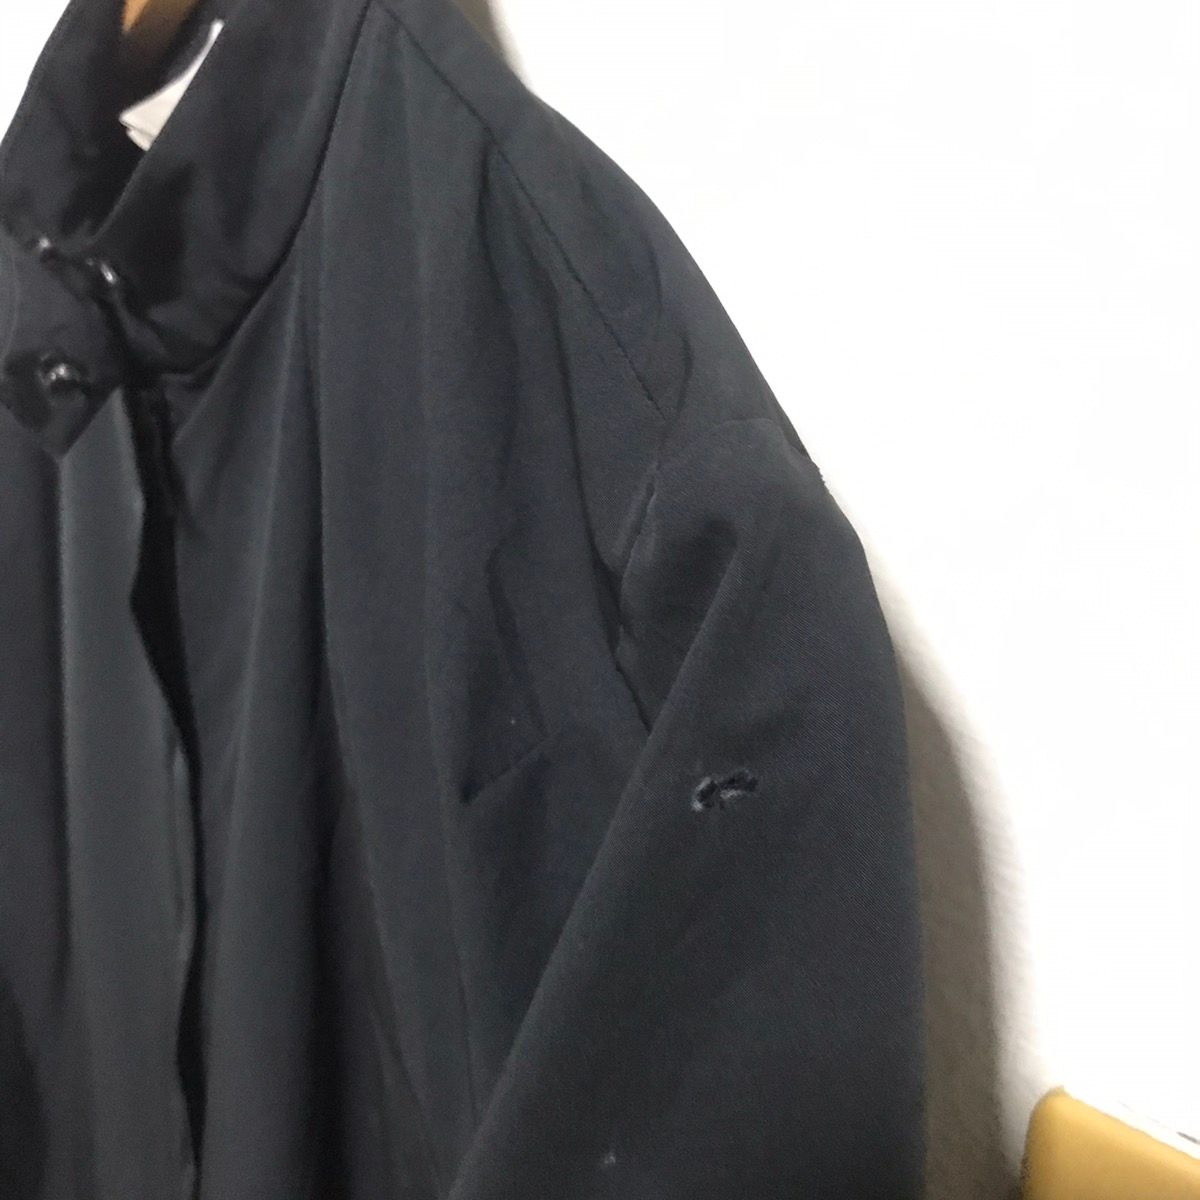 Acne Studios Bergman AW09 windbreakers coats jacket - 3